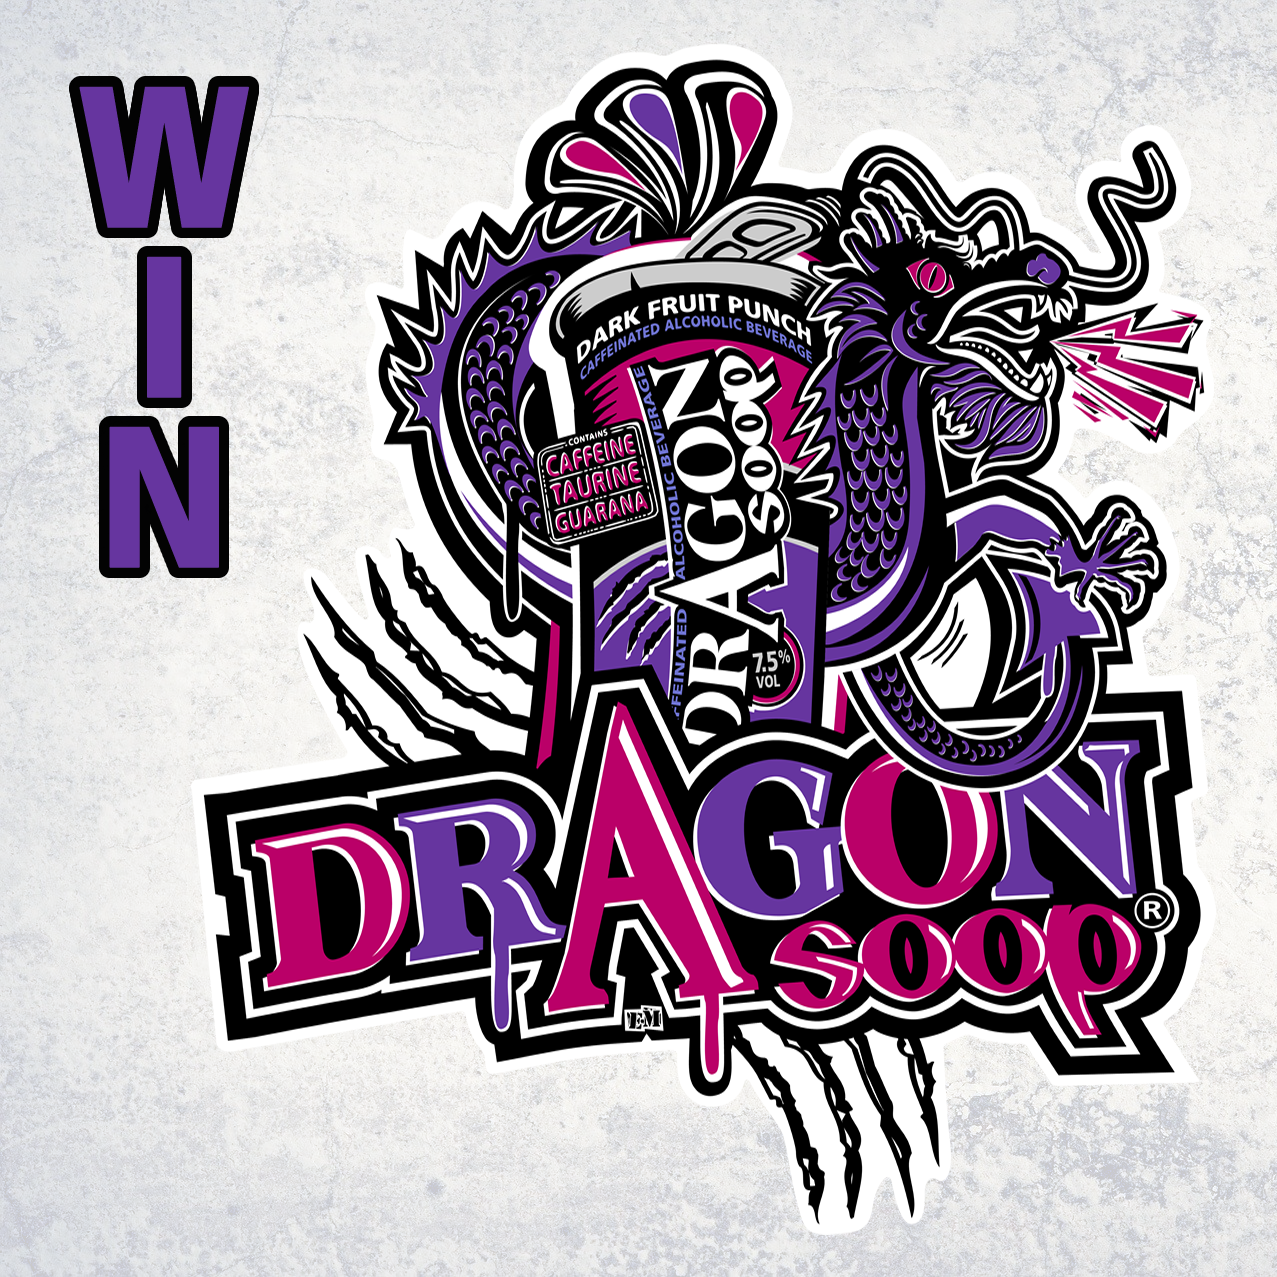 win-dragonsoop-dark-fruit-punch.png